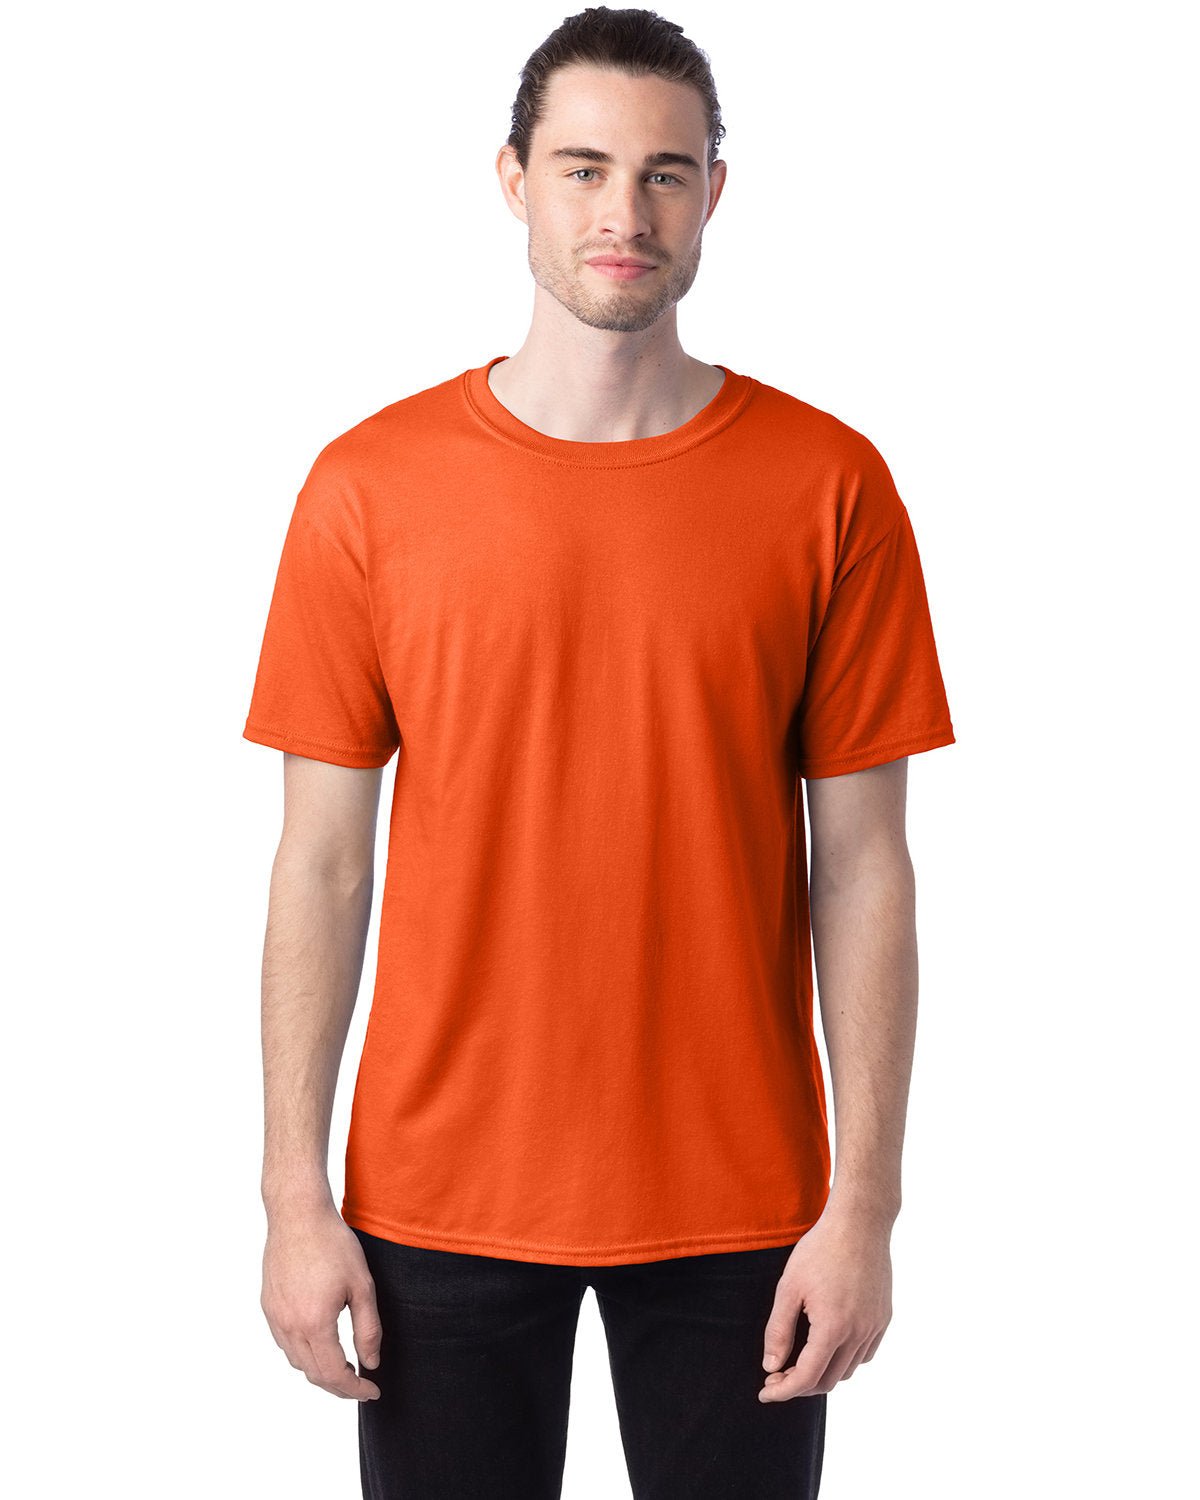 5170-Hanes-ORANGE-Hanes-T-Shirts-1